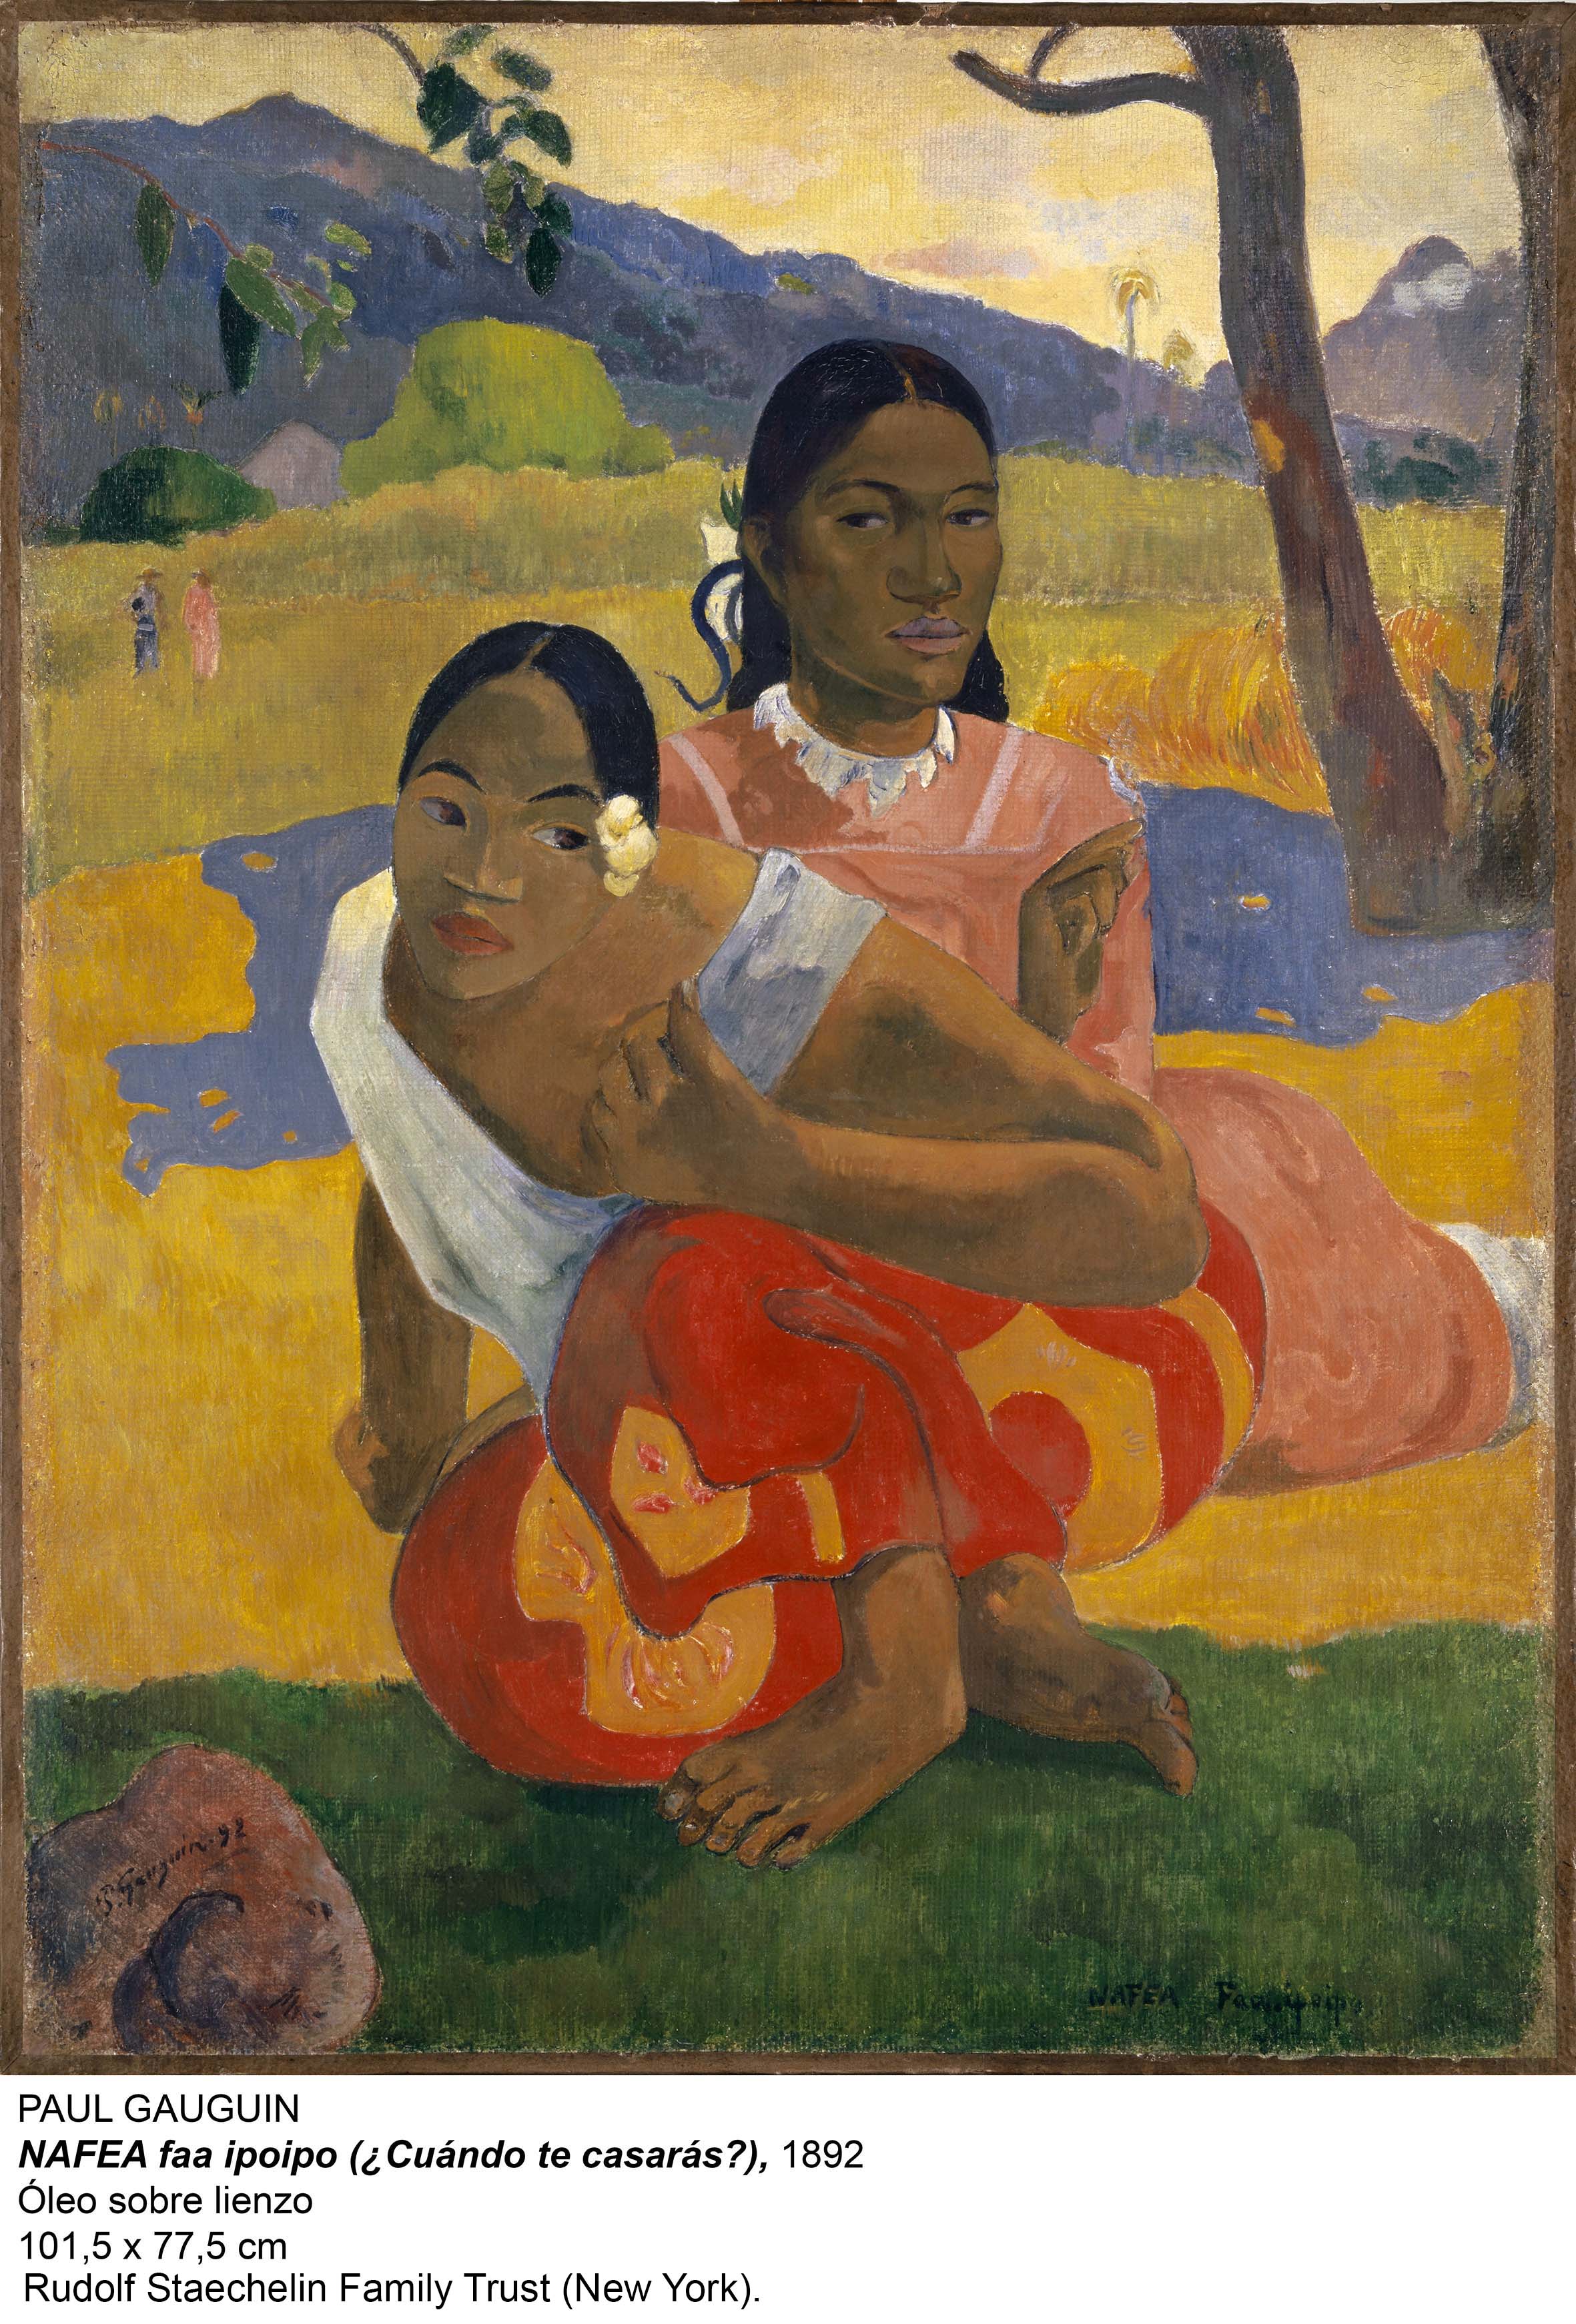 Gauguin: Quem Foi O Artista, Obras E Características